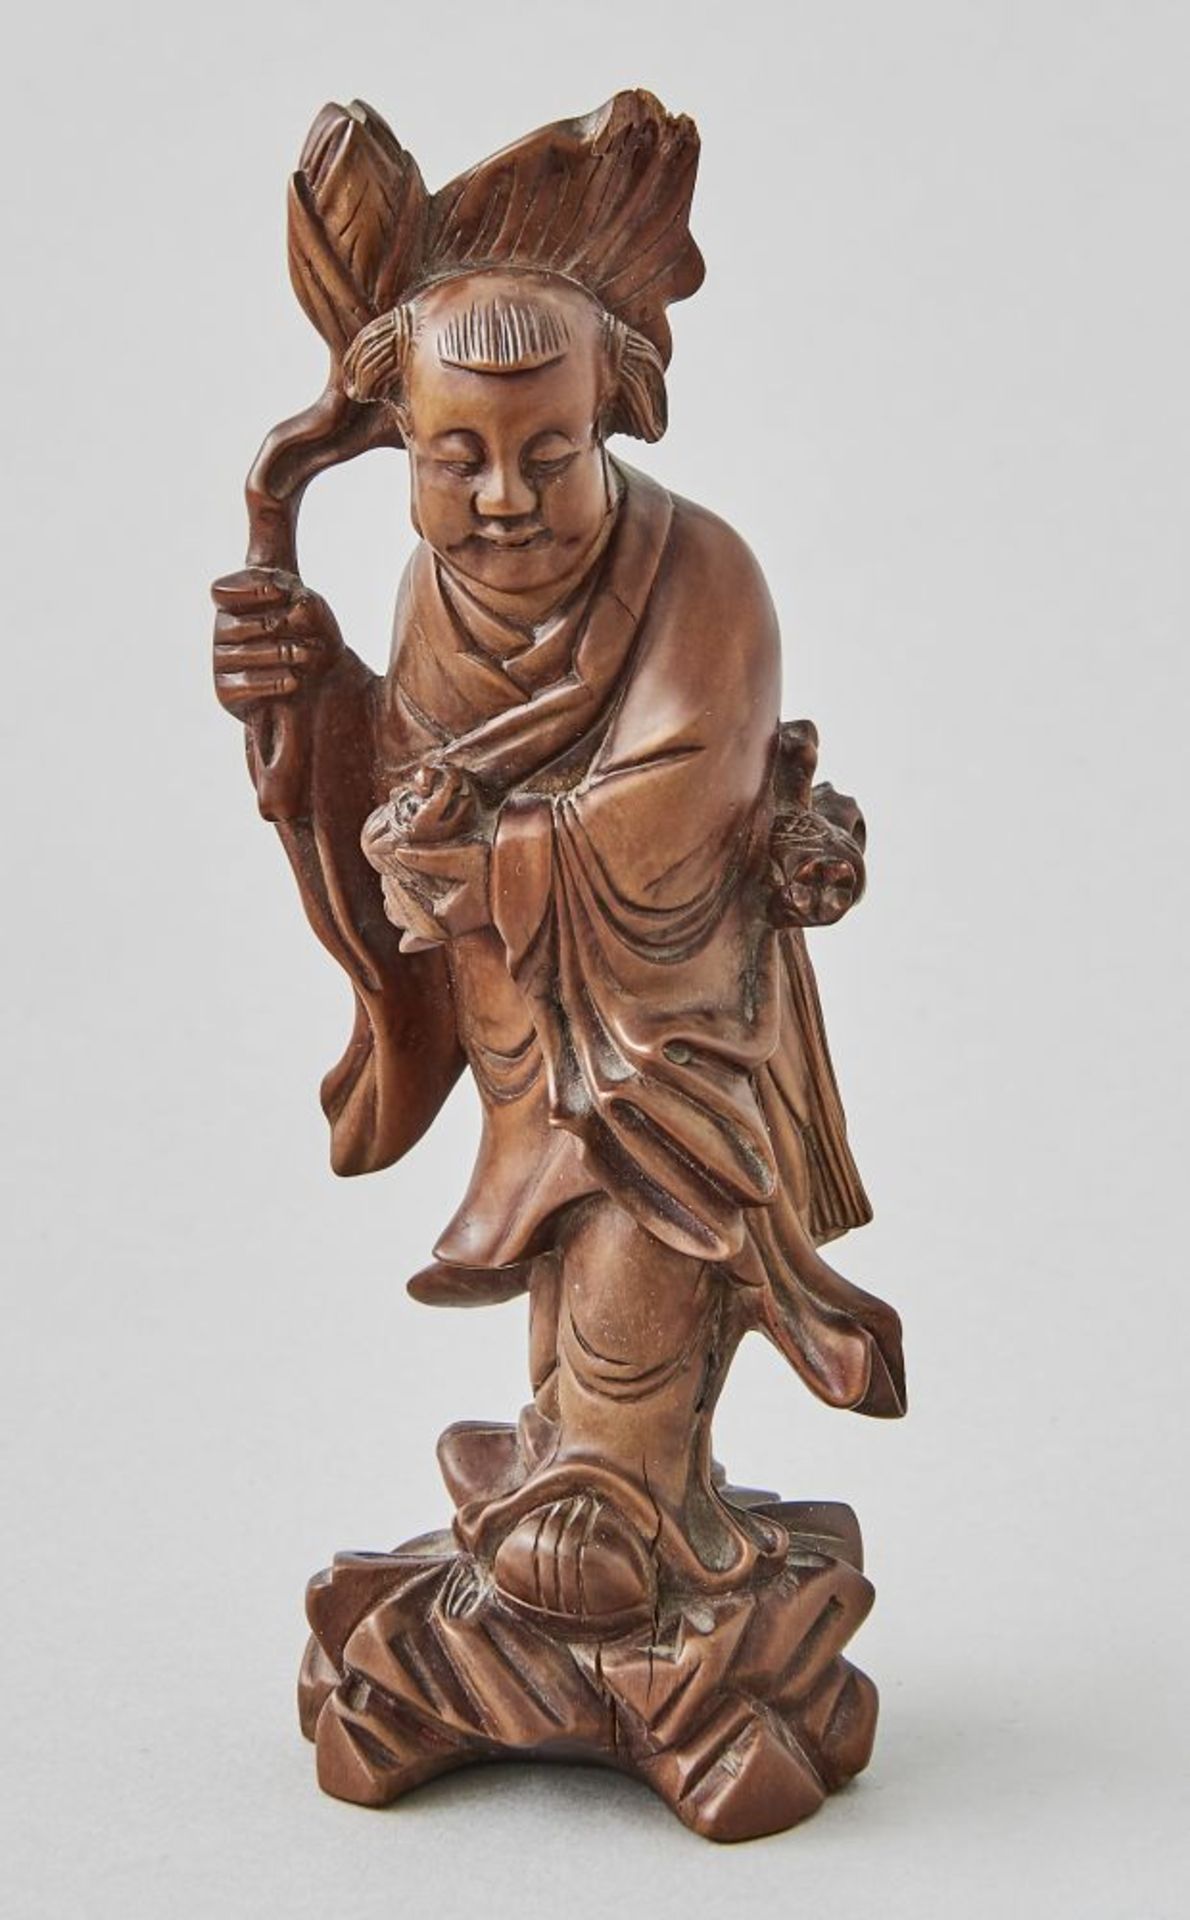 Japanische SkulpturSkulptur, wohl Buchsbaum, fein geschnitzt, Japan 19. Jhdt, Beschädigung. Höhe